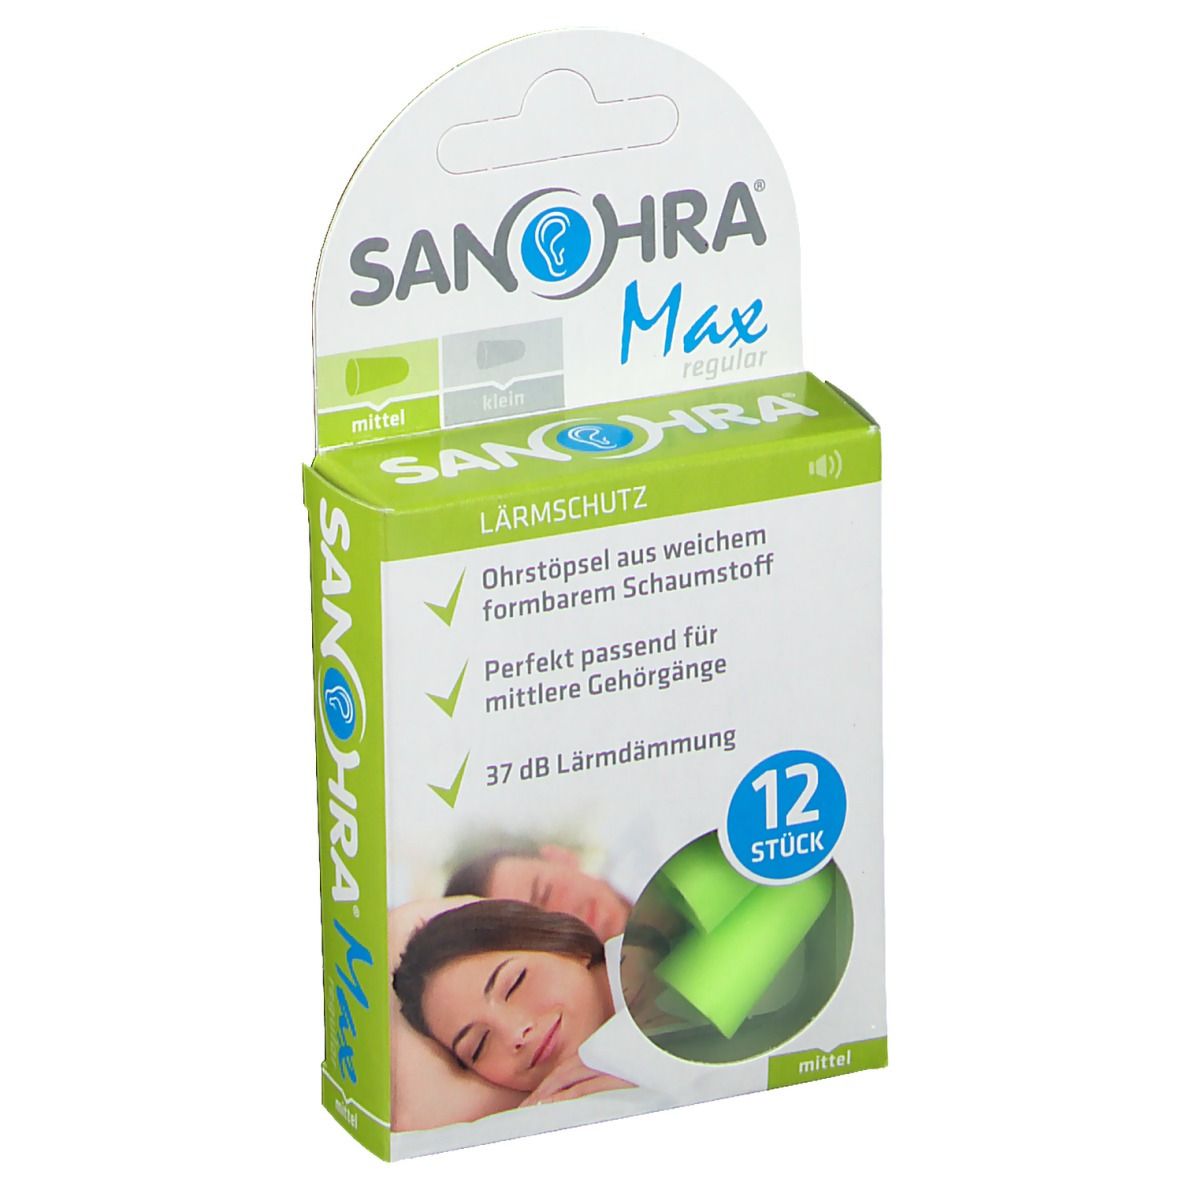 Sanohra® Max hearing protection plug for adults